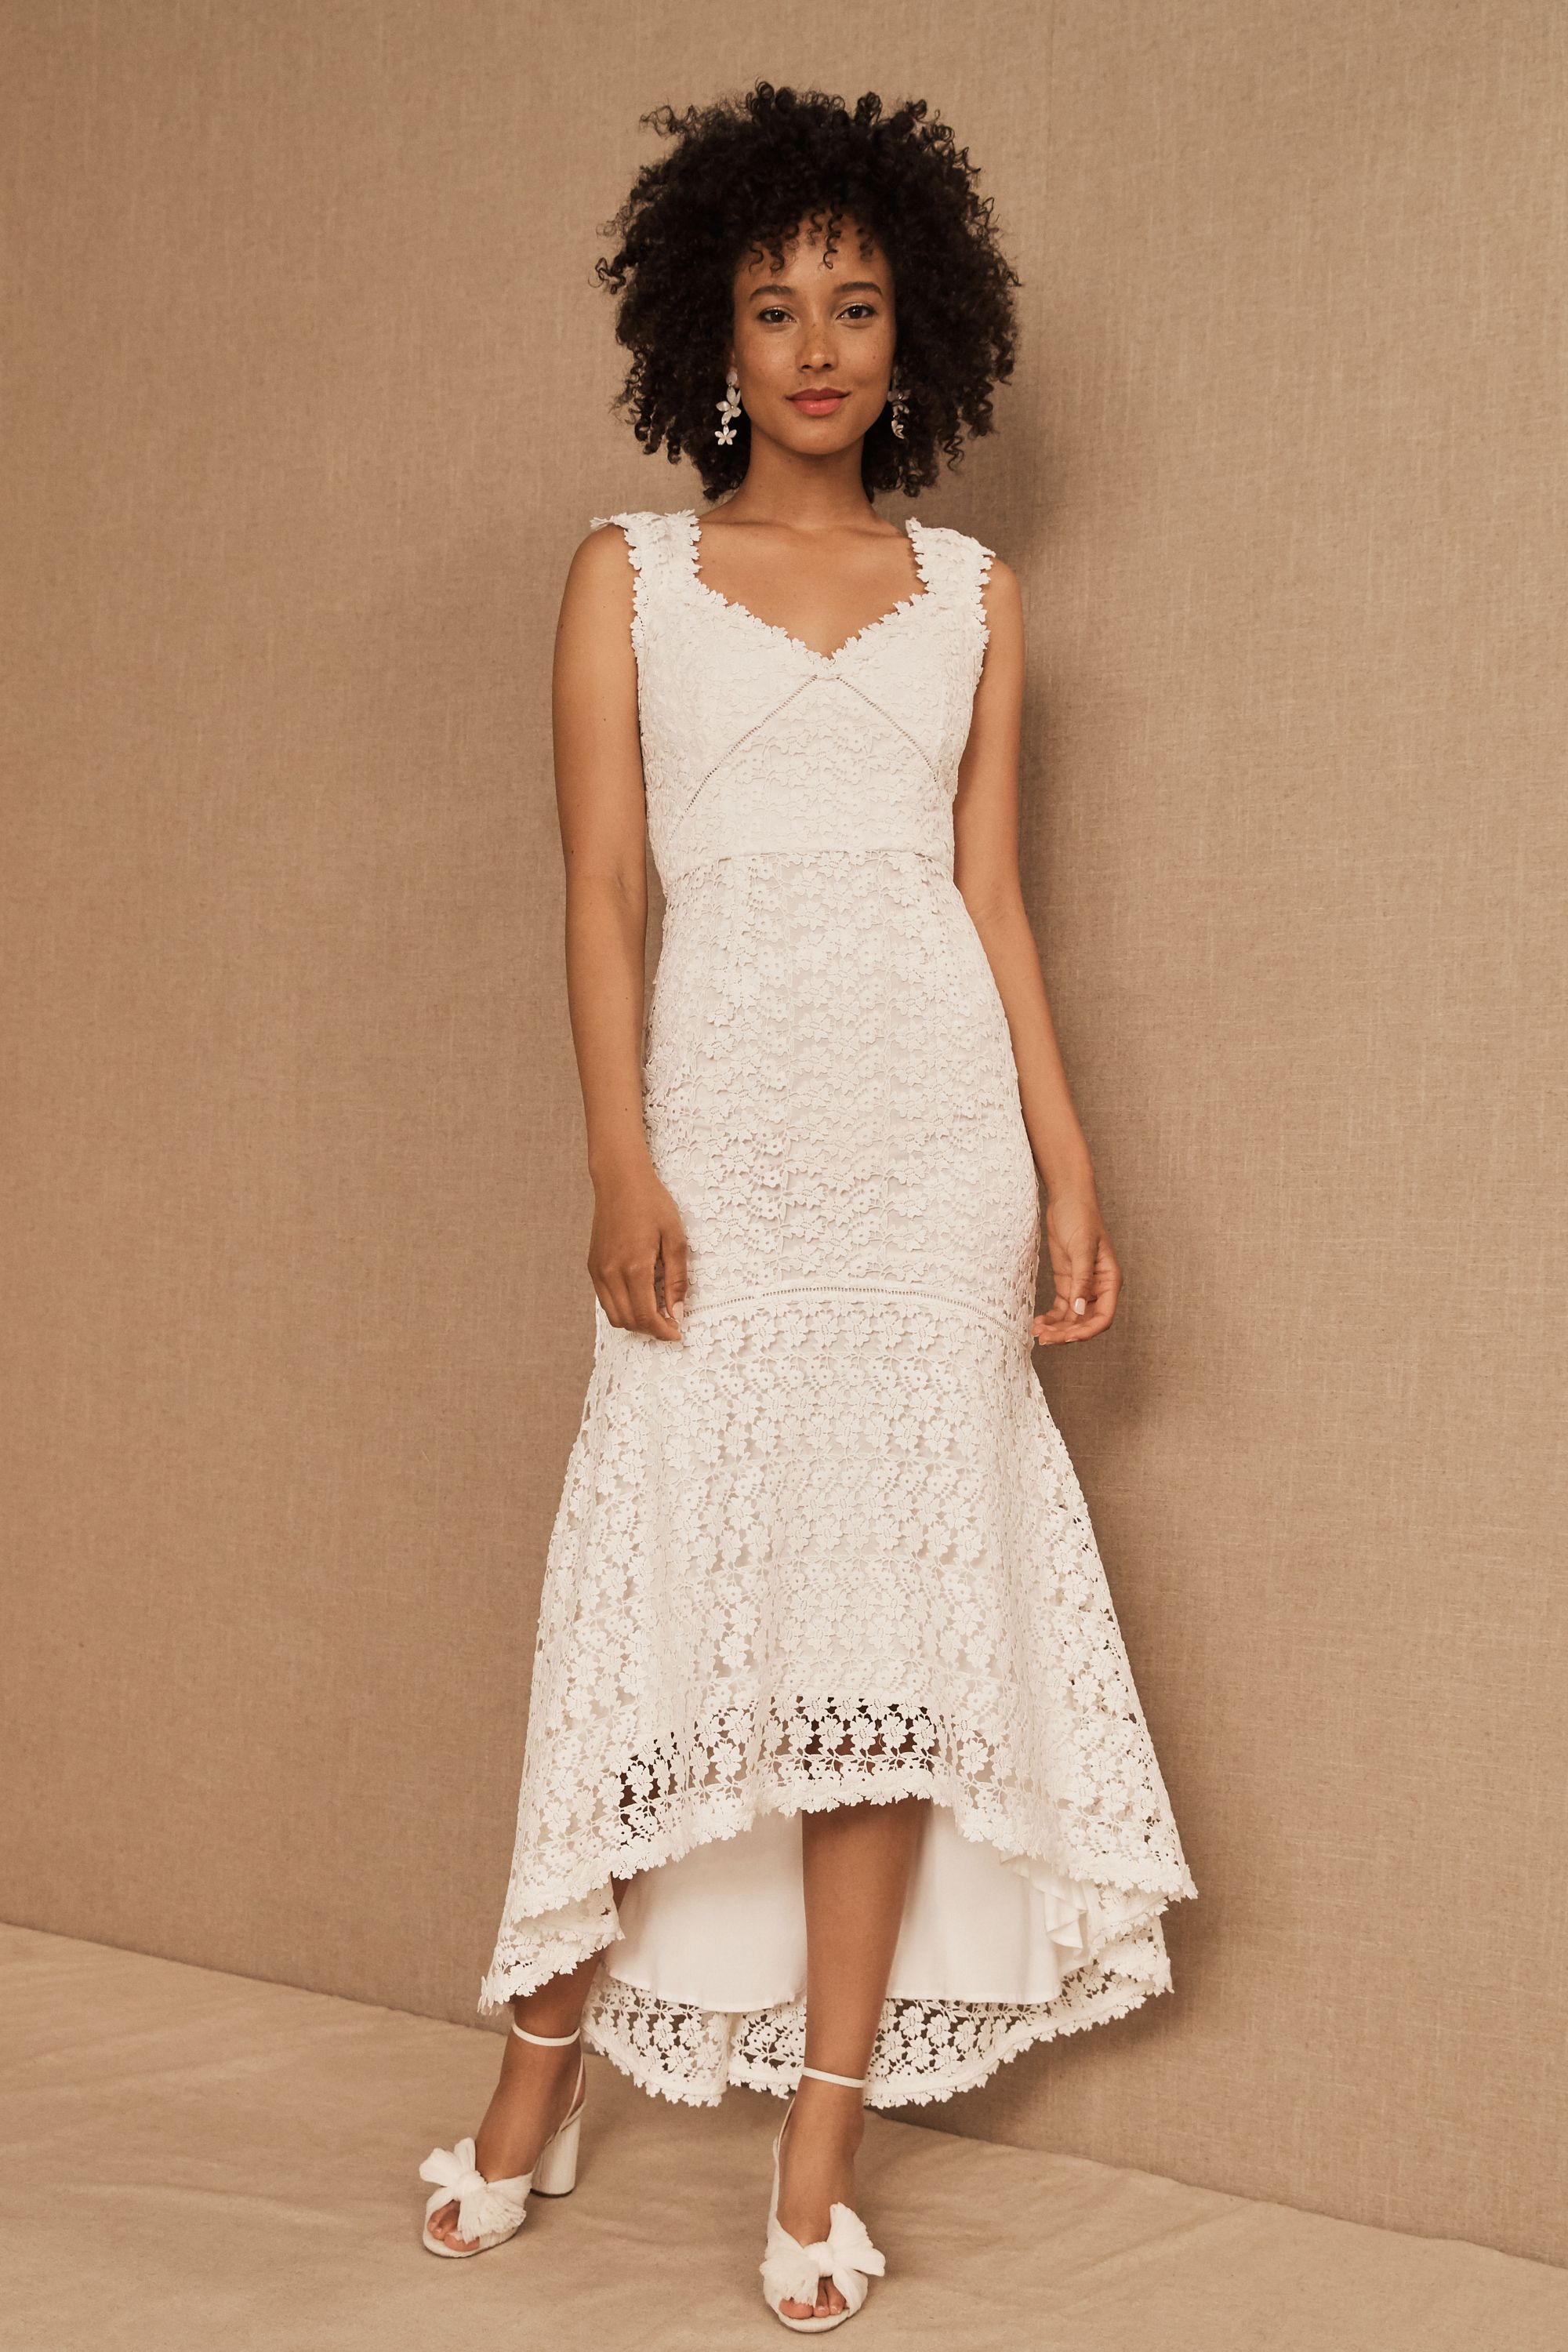 little white dress for wedding reception